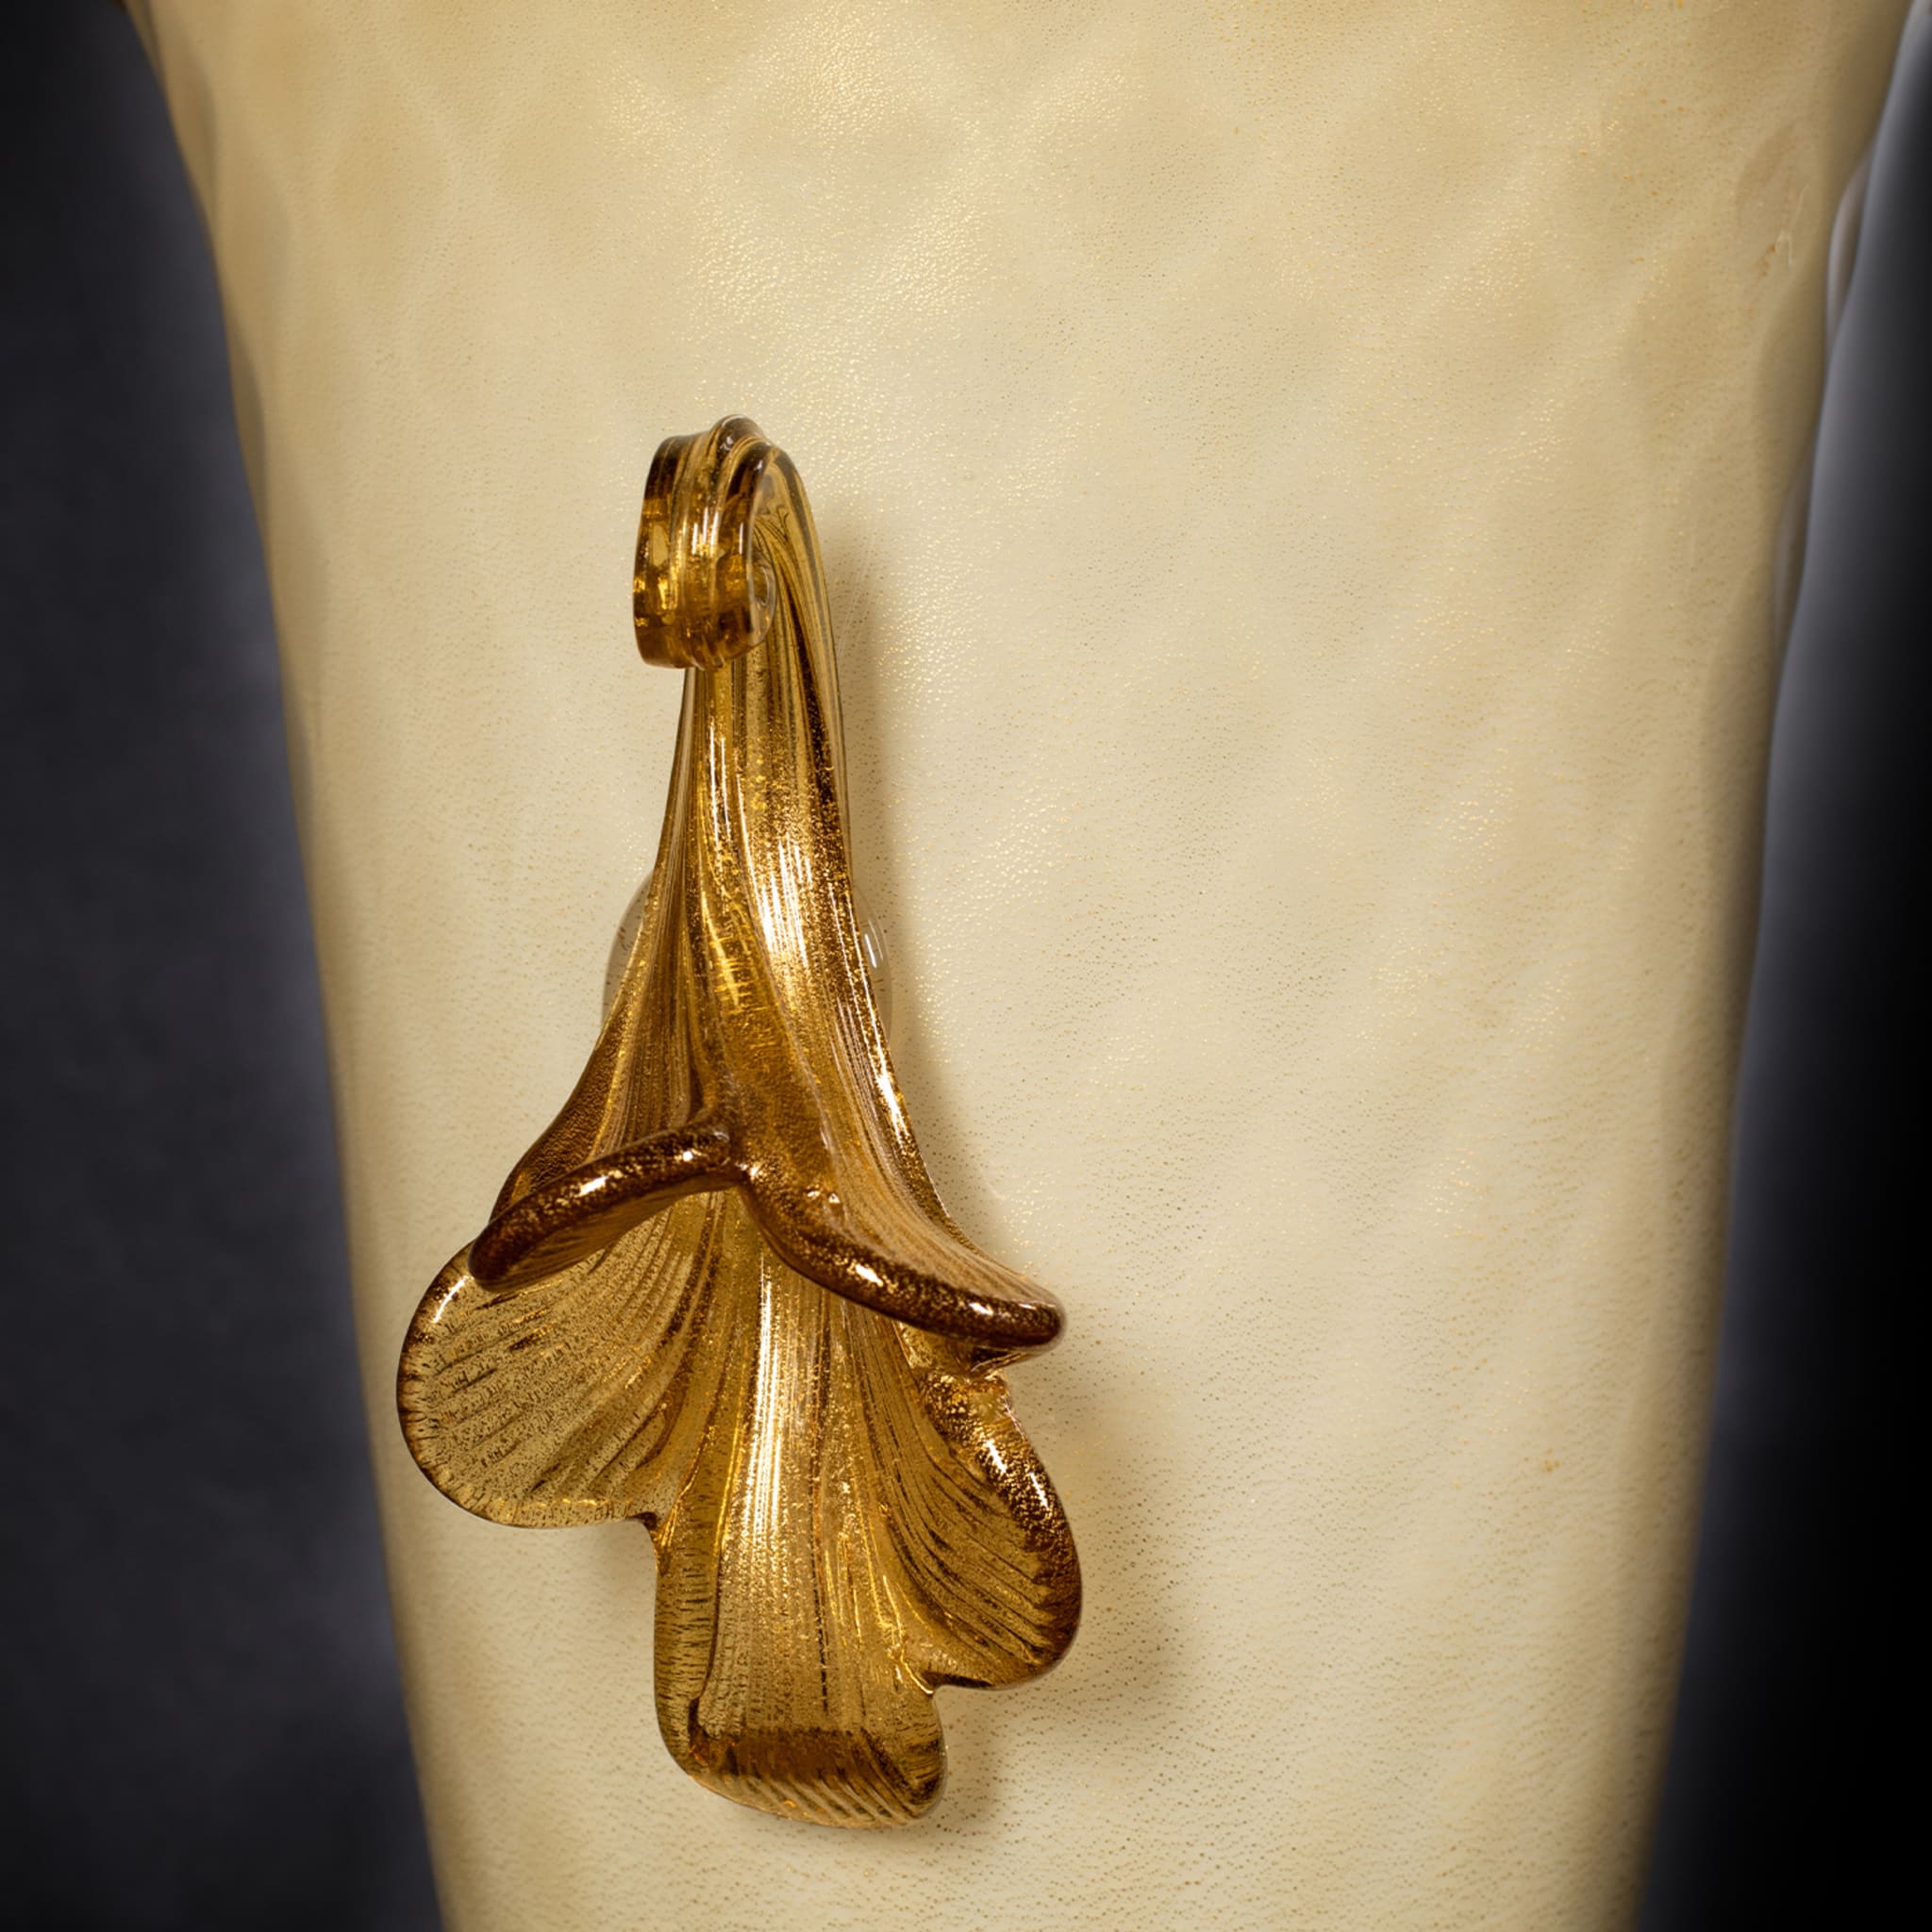 Stmat Smoky and Golden Goblet-Shape Vase - Alternative view 1